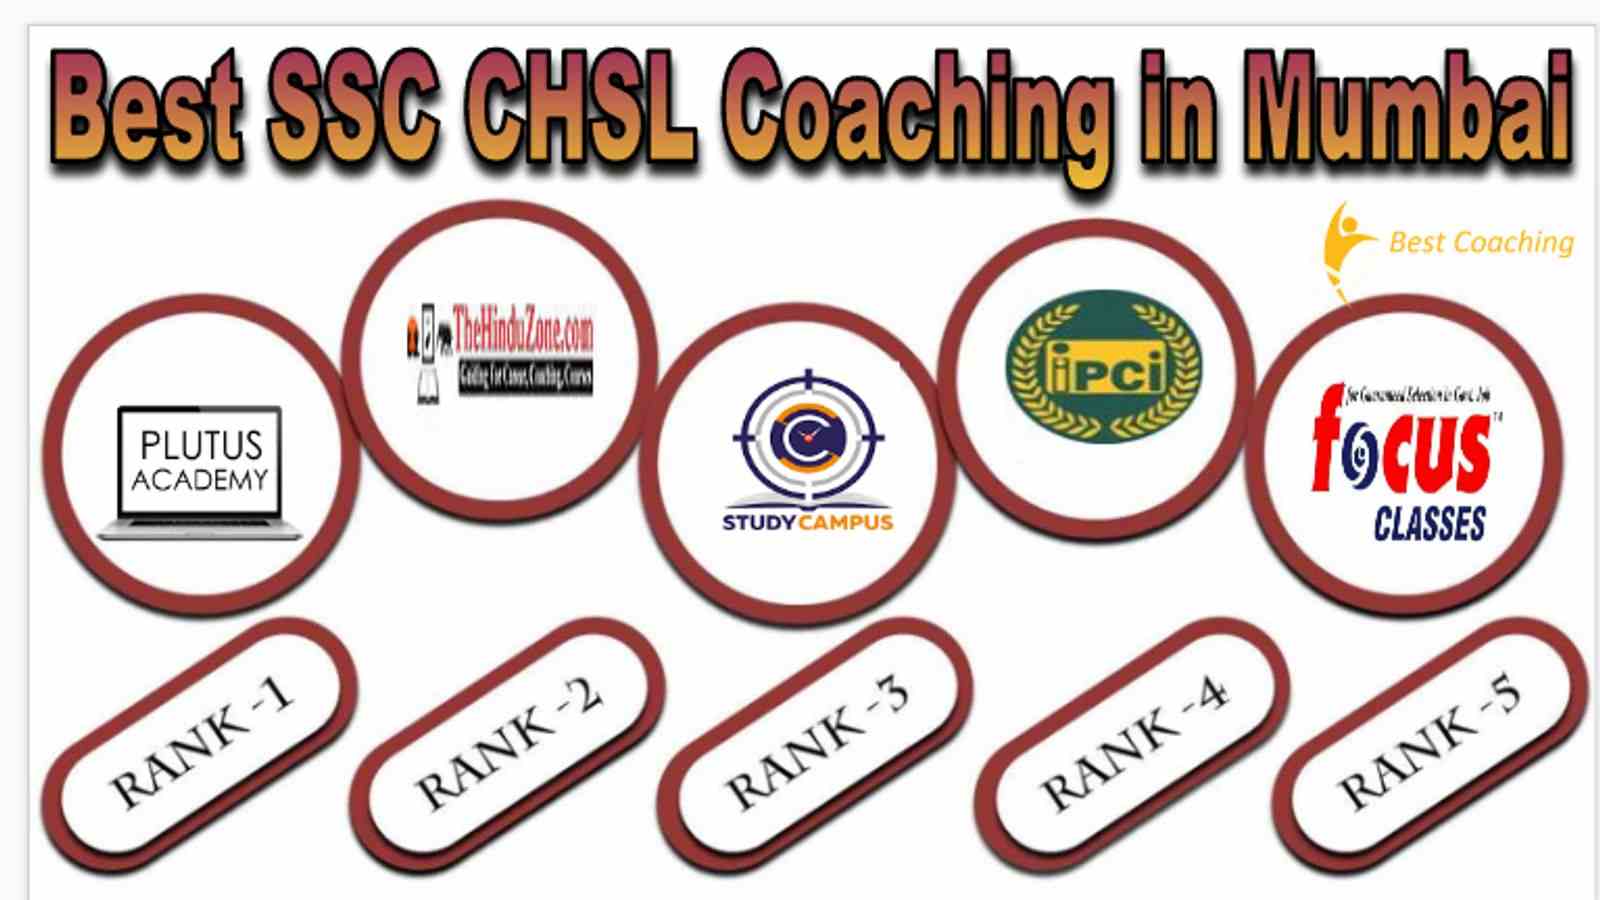 Best SSC CHSL Coaching in Mumbai